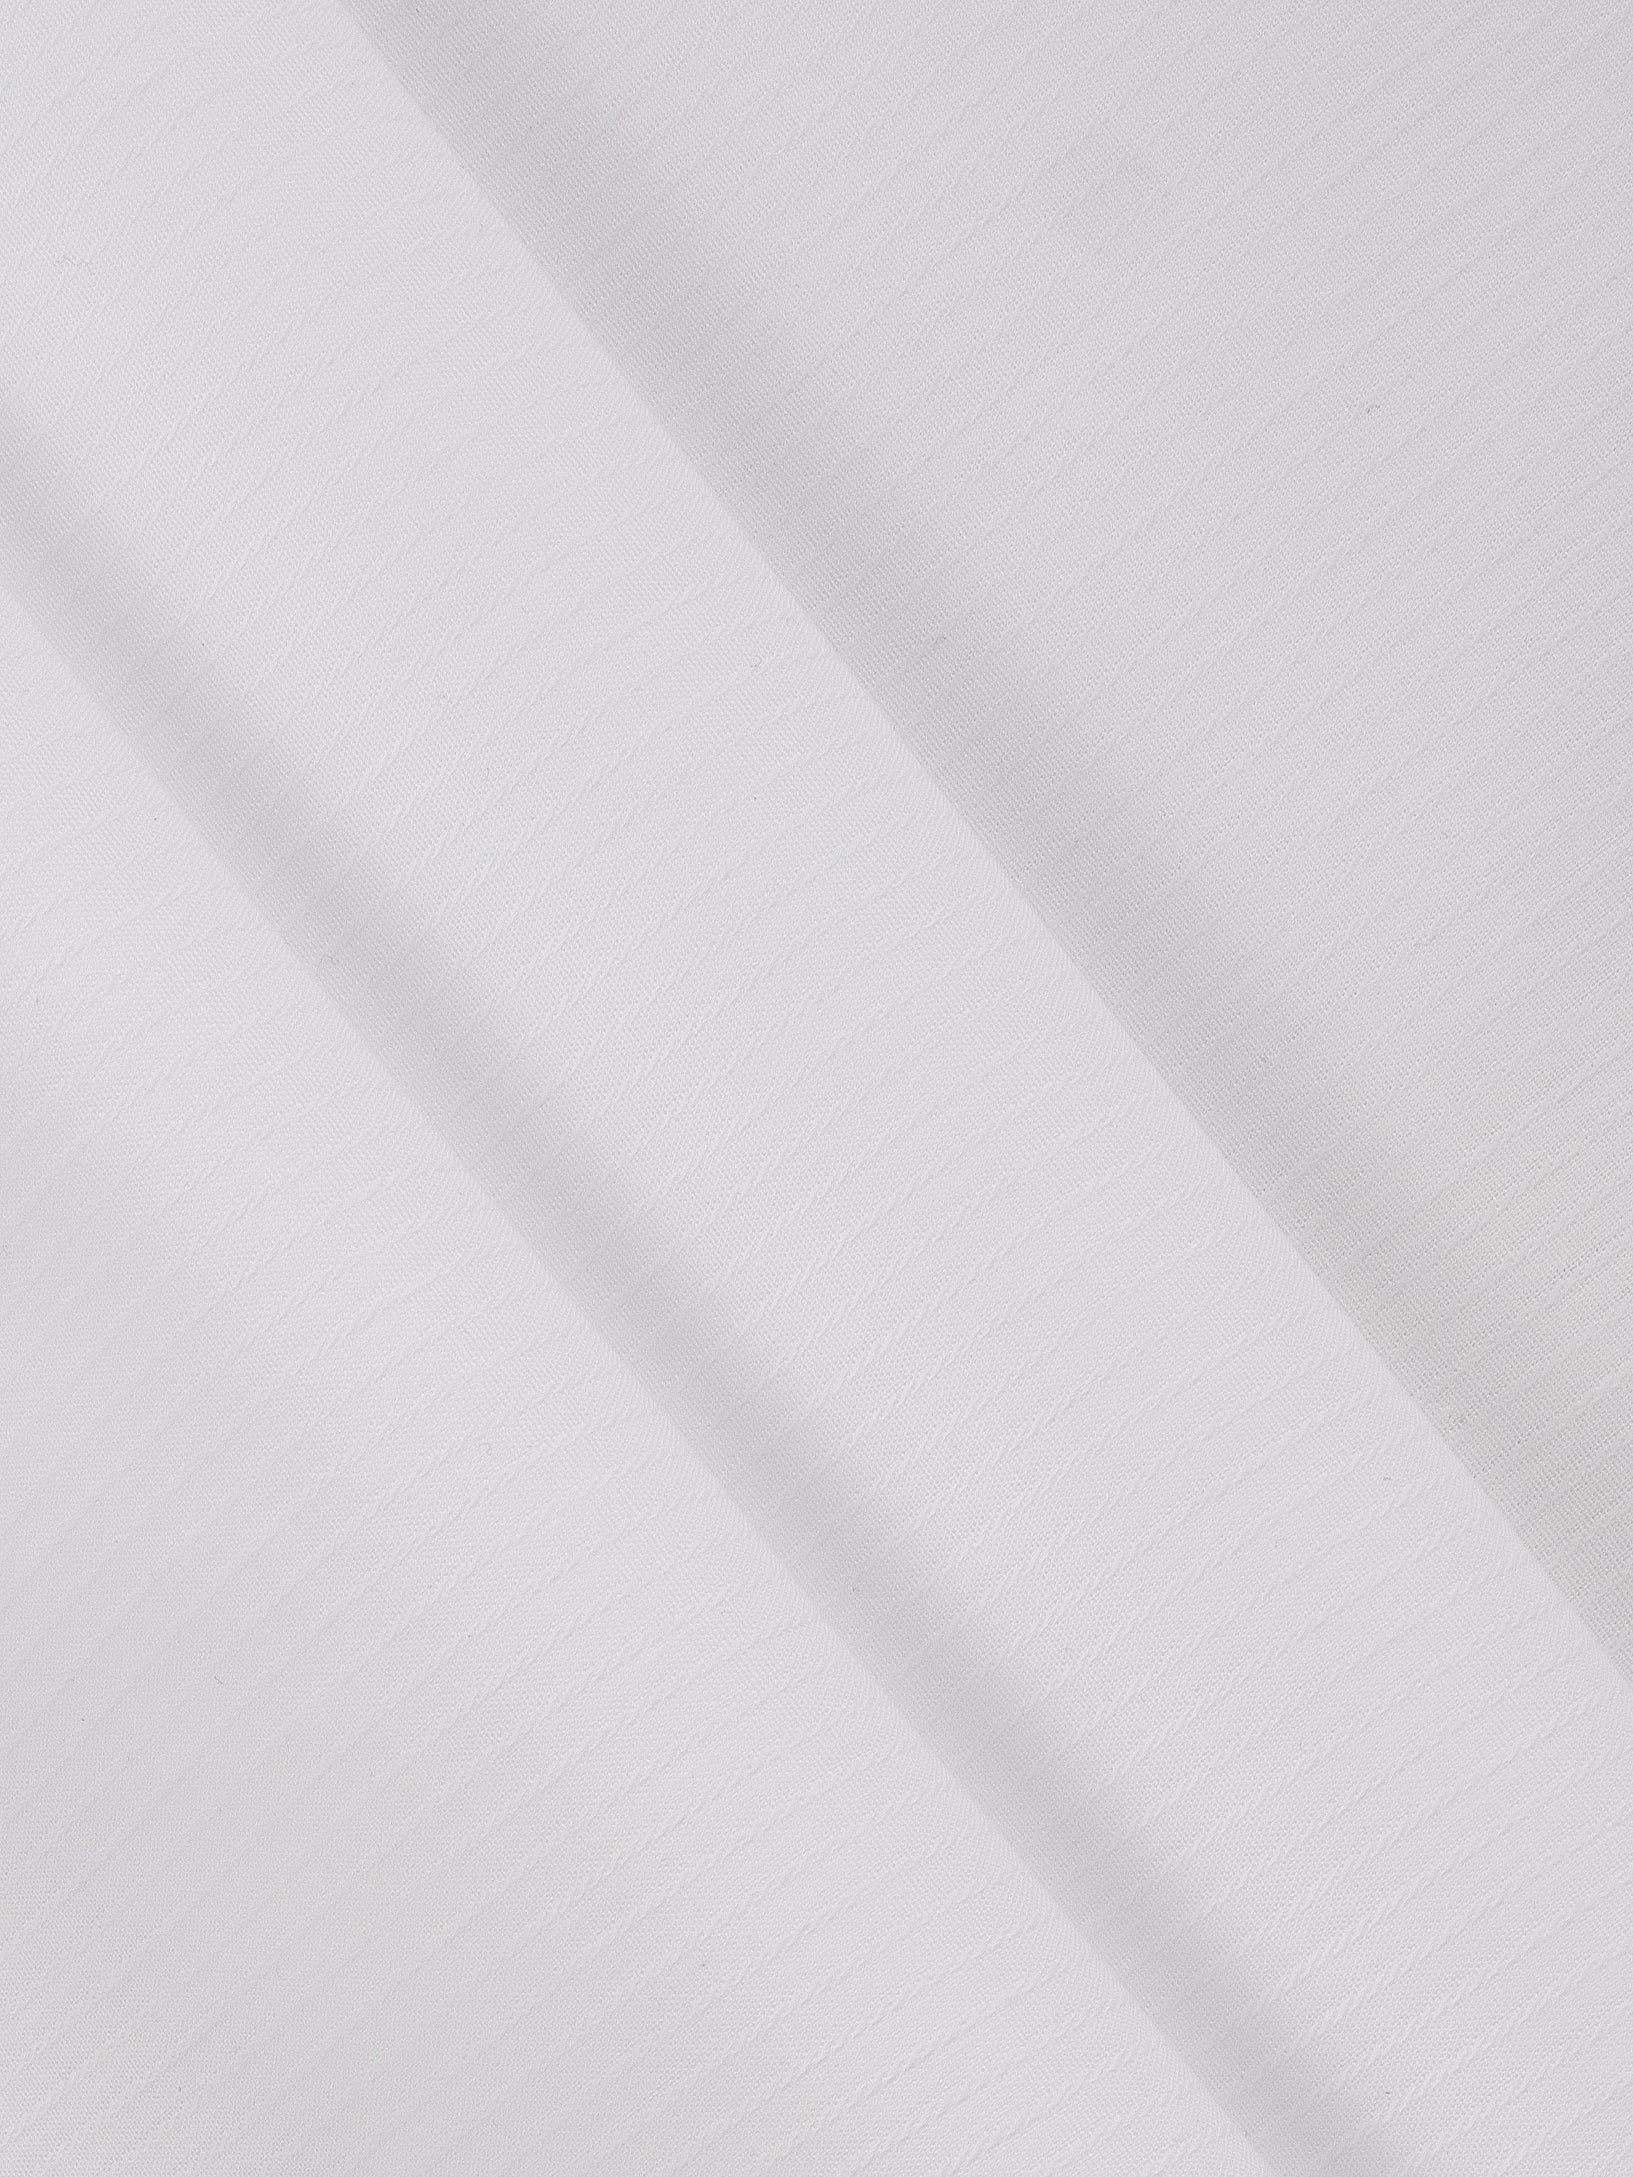 Wrinkle Free Cotton White Plain Pants Fabric Romantic-Pattern view